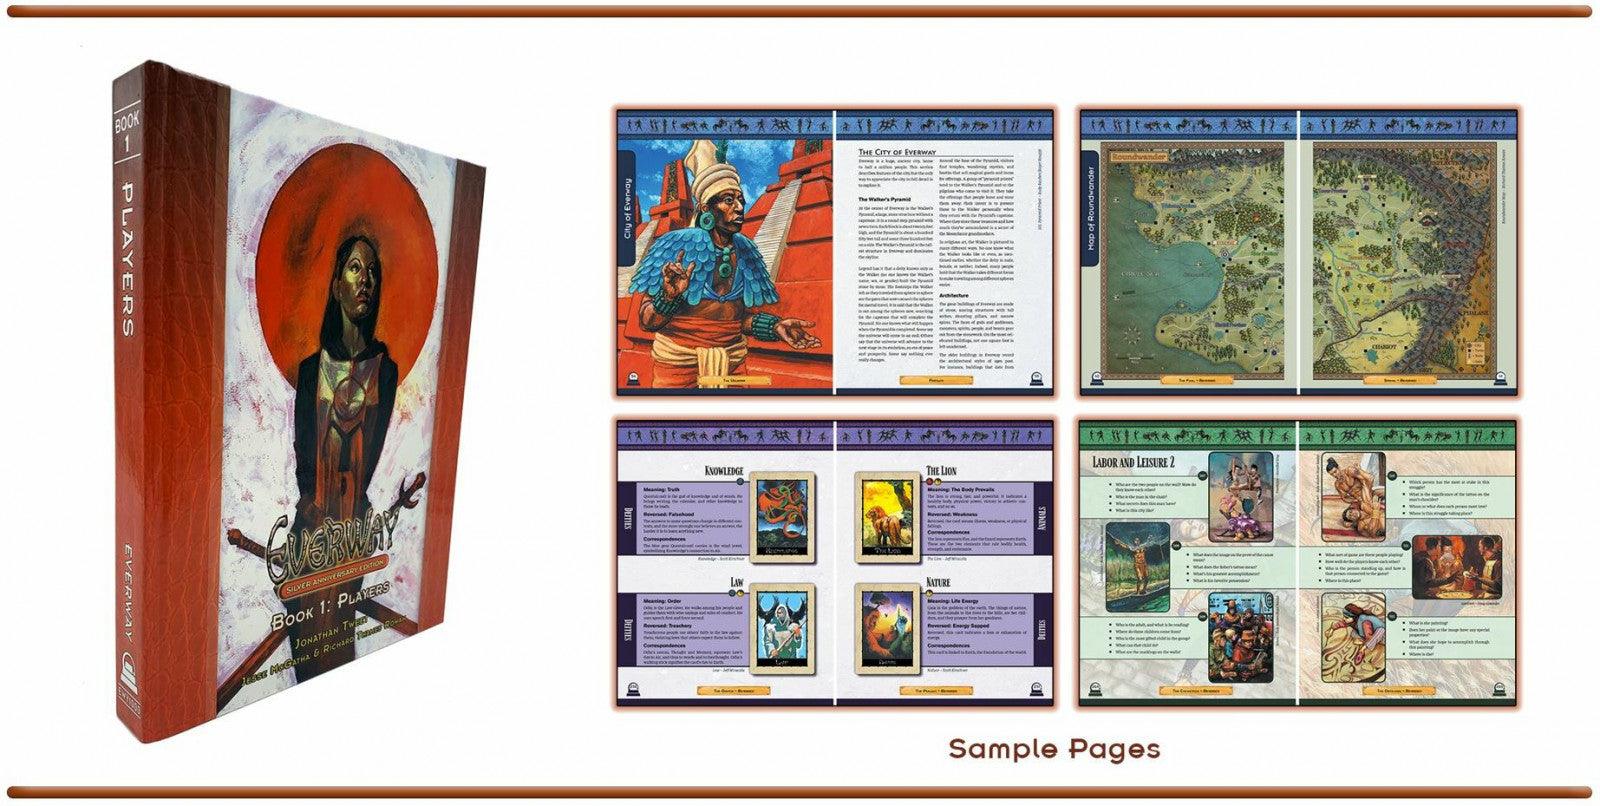 VR-97135 Everway RPG Book 1 - Players - Atlas Games - Titan Pop Culture